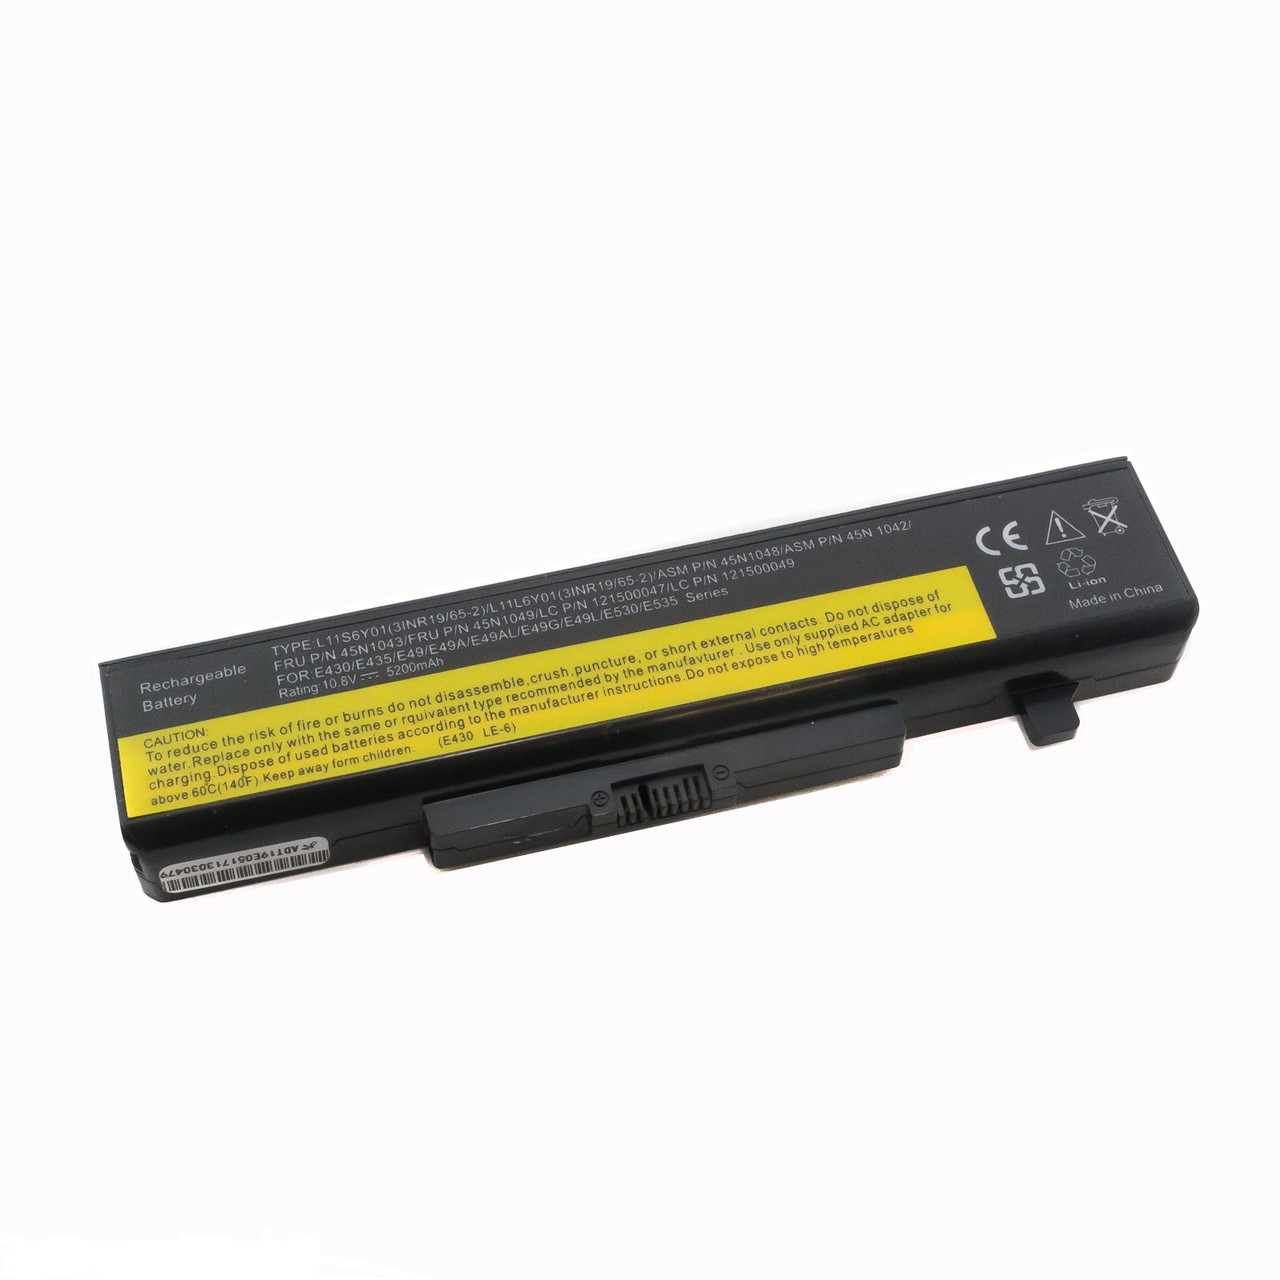 Оригинальный аккумулятор (батарея) для ноутбука Lenovo IdeaPad B490 (L11S6Y01) 10.8V 48Wh